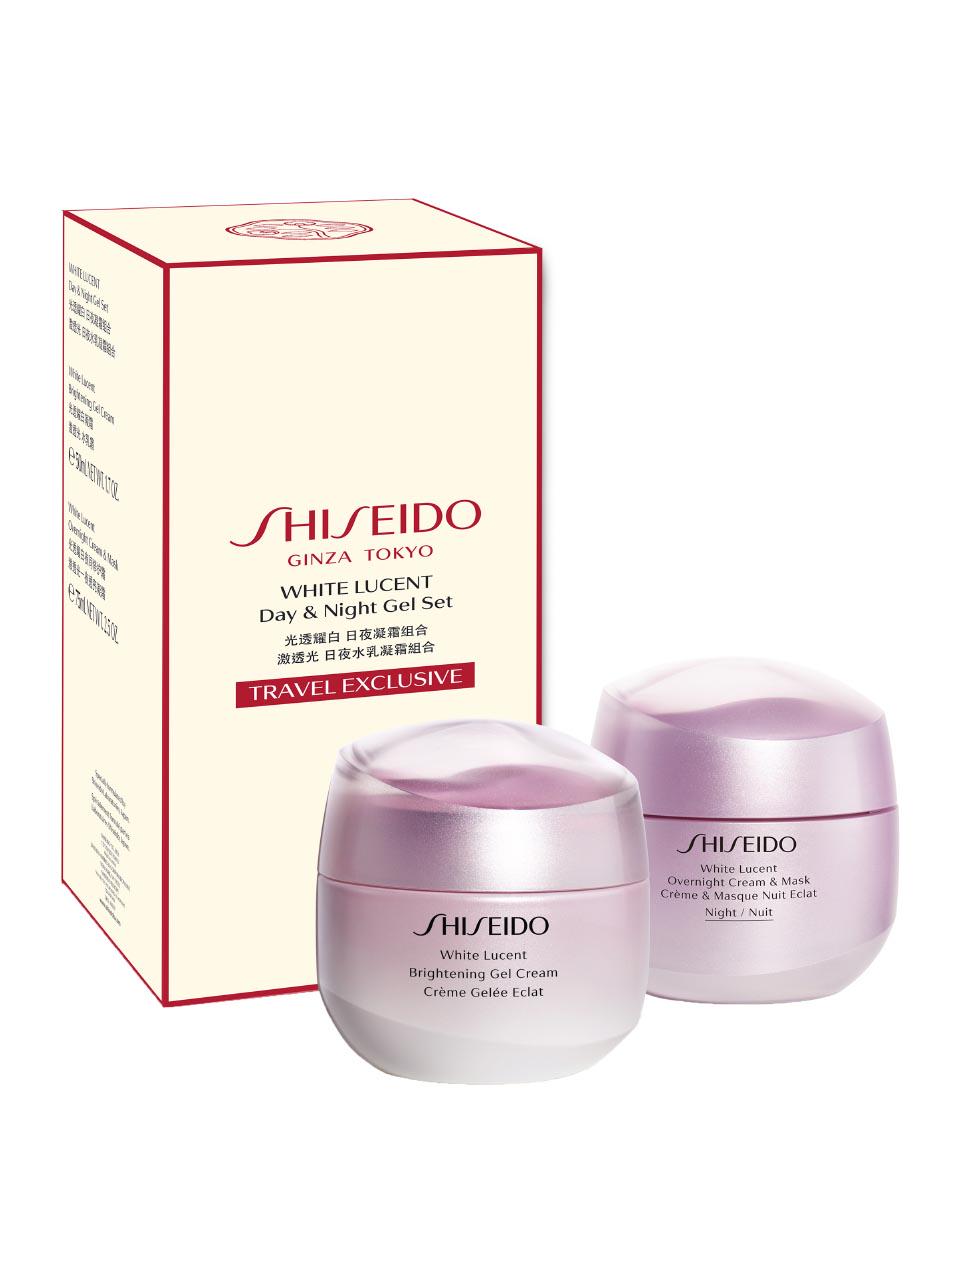 Ved tak skal du have Nervesammenbrud Shiseido White lucent Face Care Set | Frankfurt Airport Online Shopping